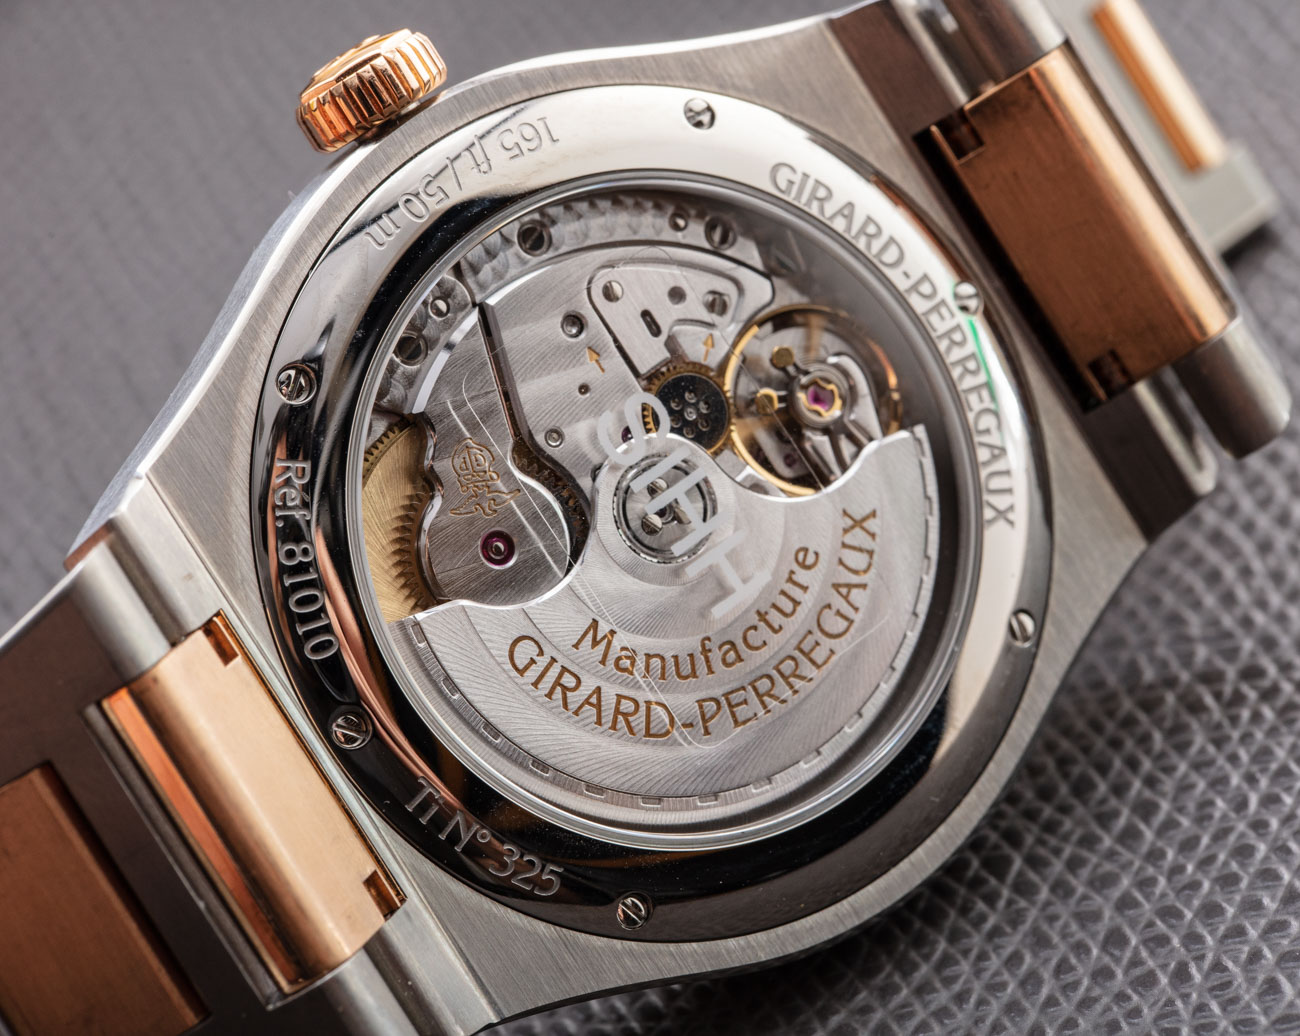 Girard-Perregaux Laureato 42 MM Titanium & Pink Gold Watch Review Wrist Time Reviews 